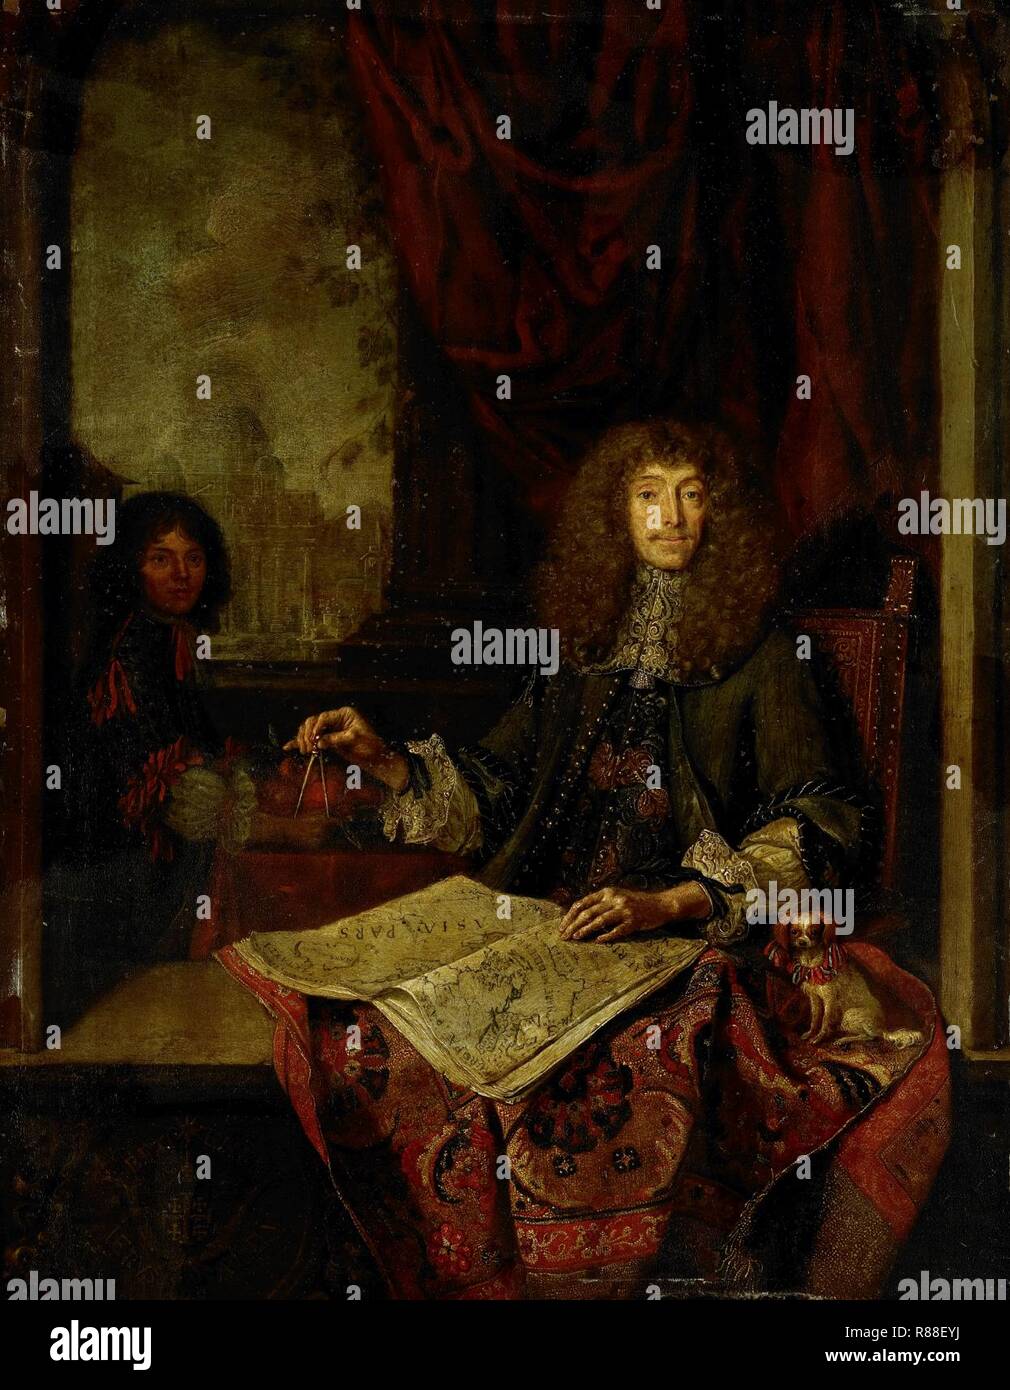 Carel Quina (1620-89). Ridder van het Heilige Graf, Amsterdams reiziger naar Azië Stockfoto